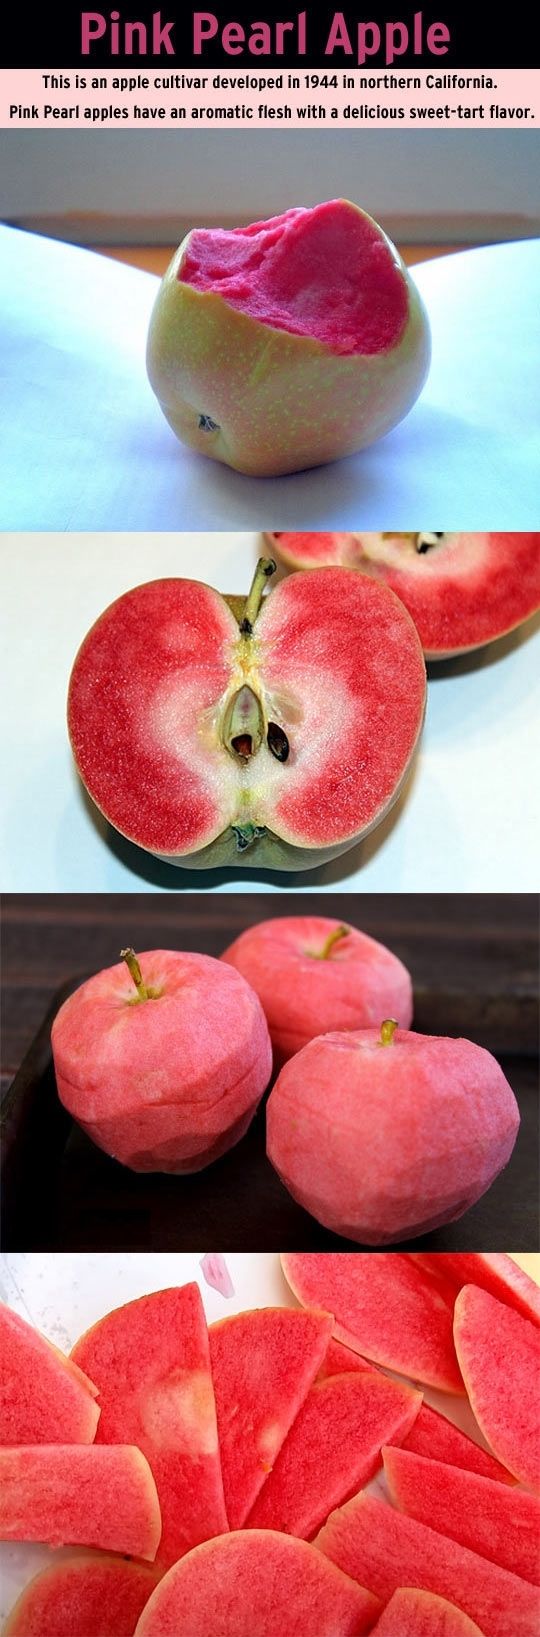 Pink Pearl Apple.